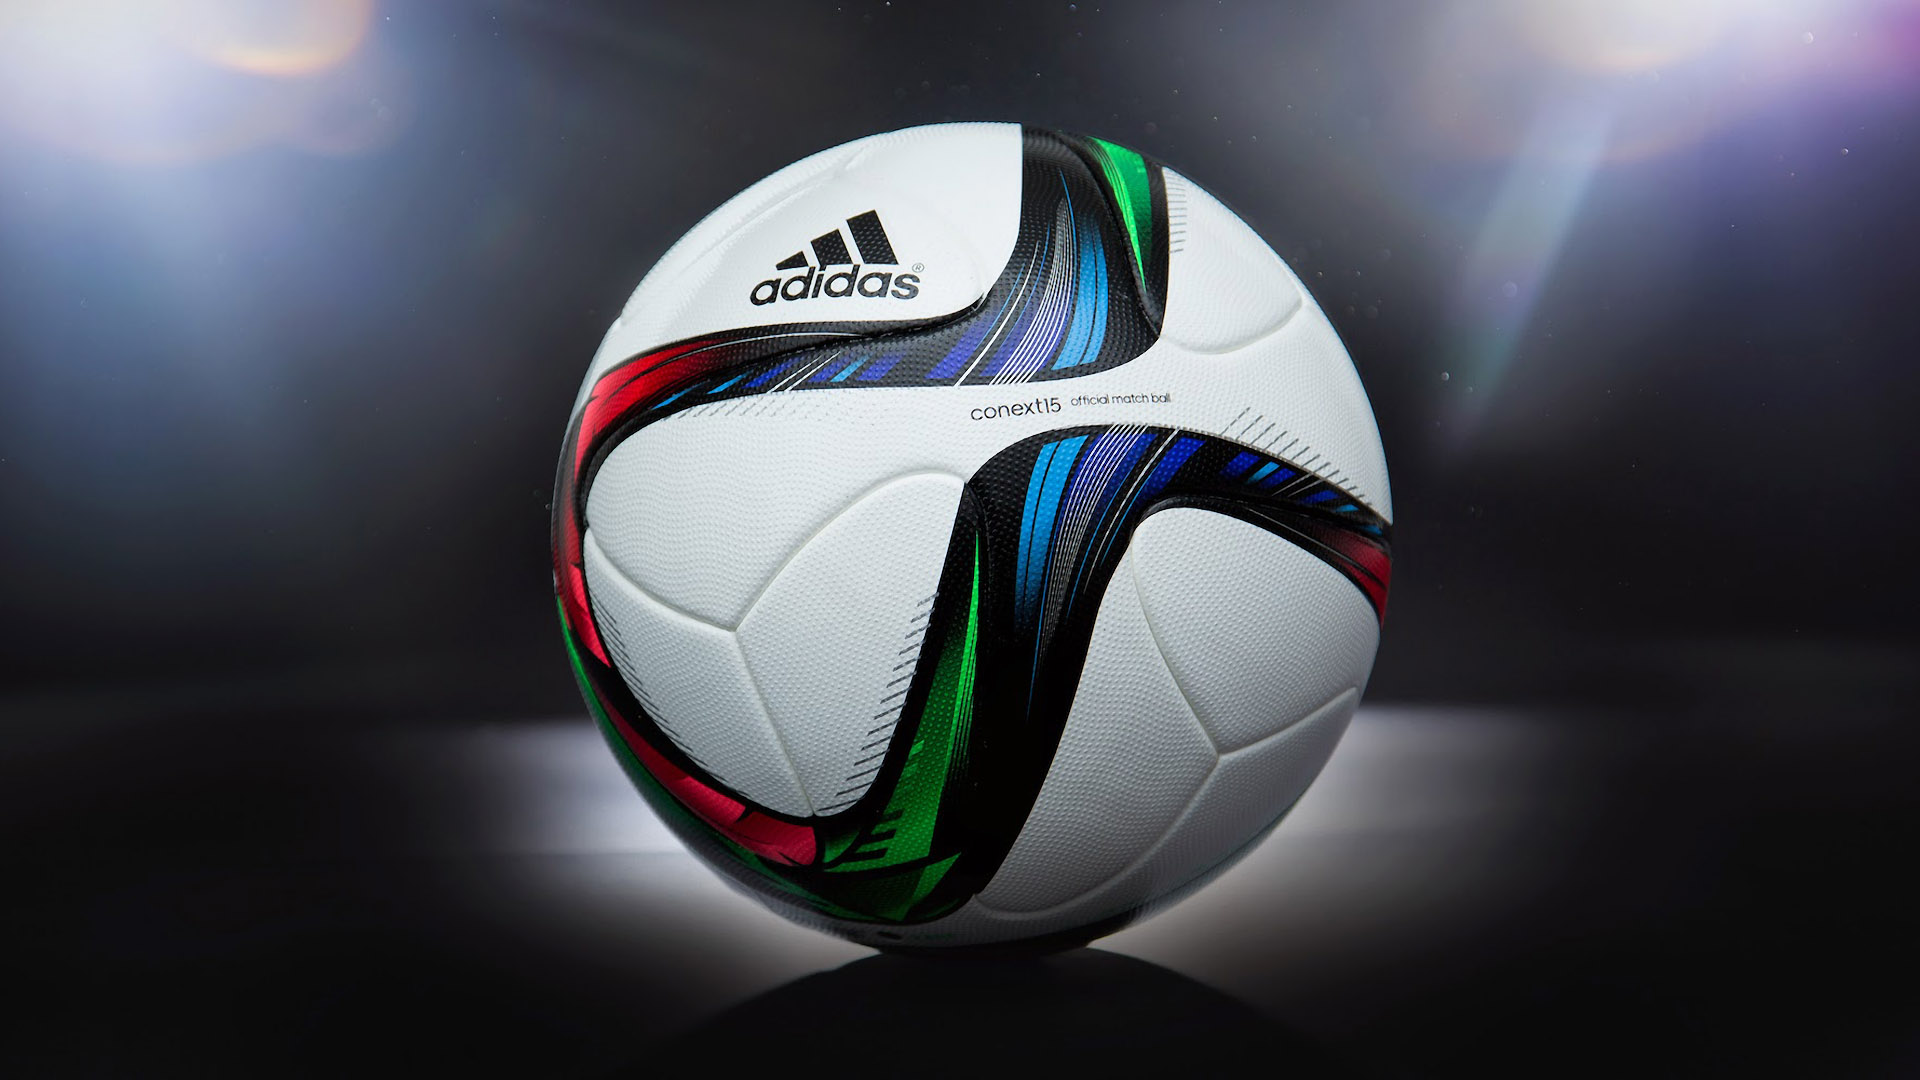 Adidas Soccer Wallpaper HD - PixelsTalk.Net